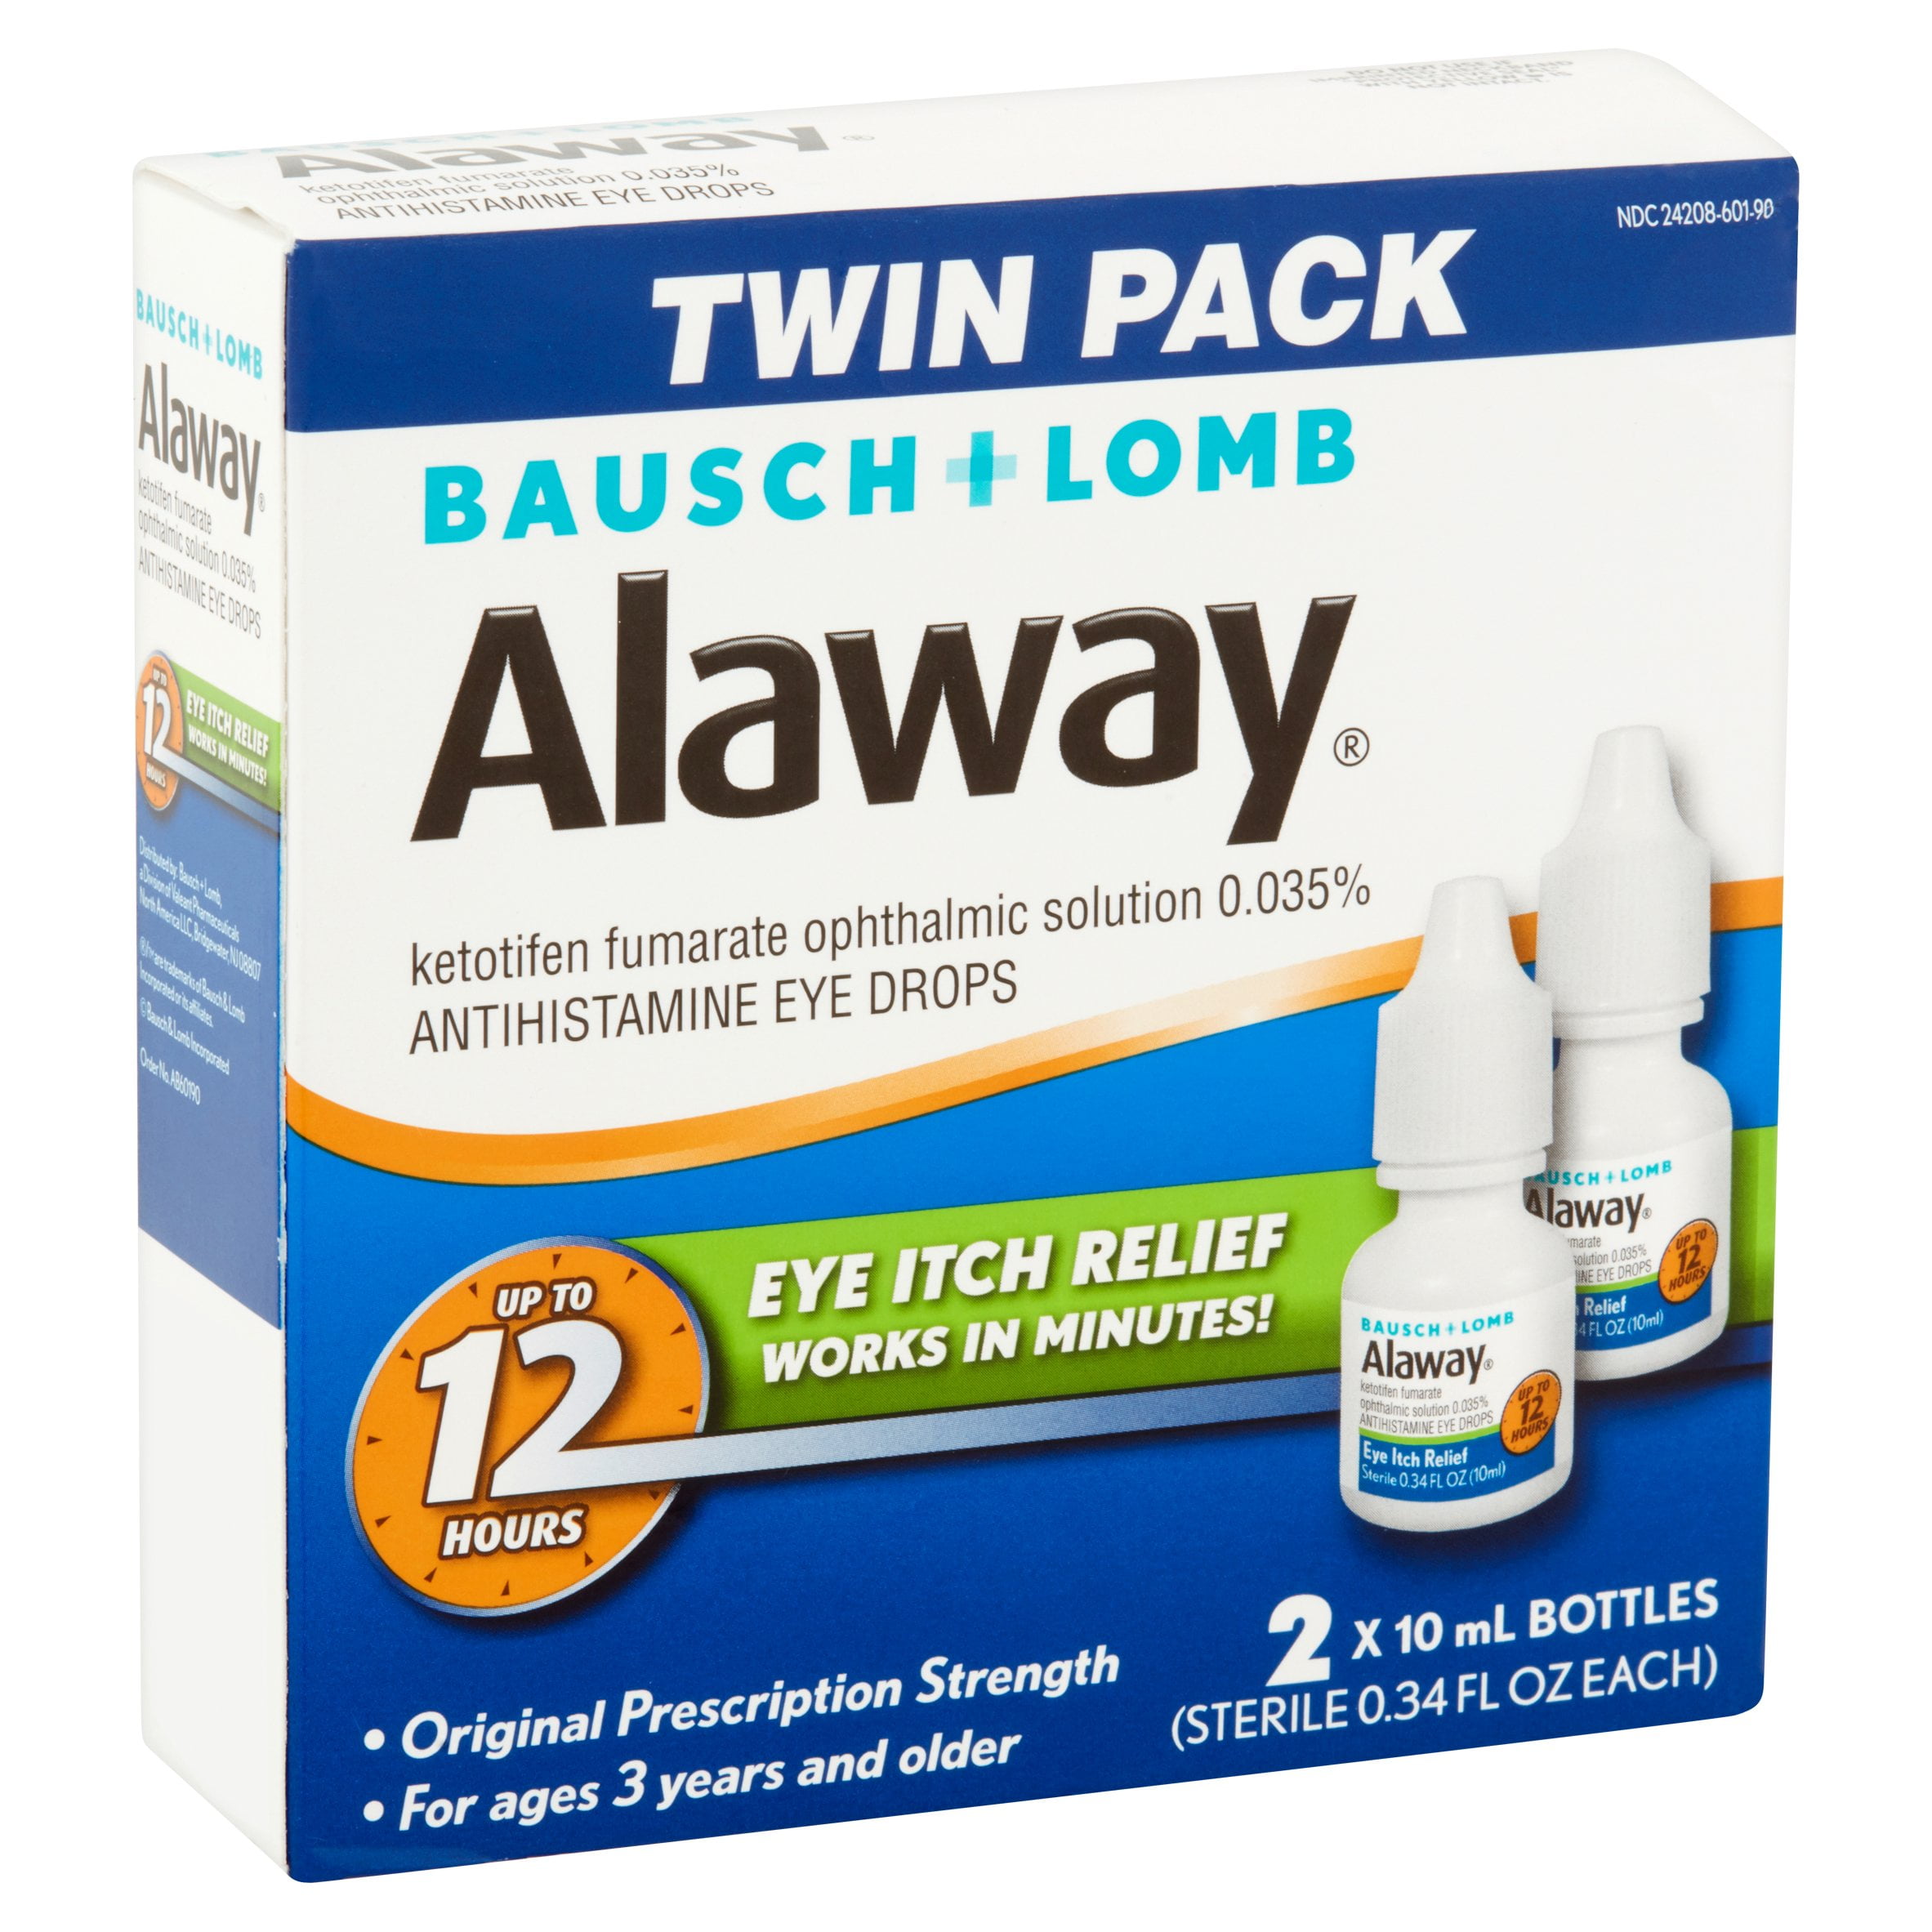 Bausch + Lomb Alaway Antihistamine Eye Drops Twin Pack, 0.34 fl oz, 2 count  